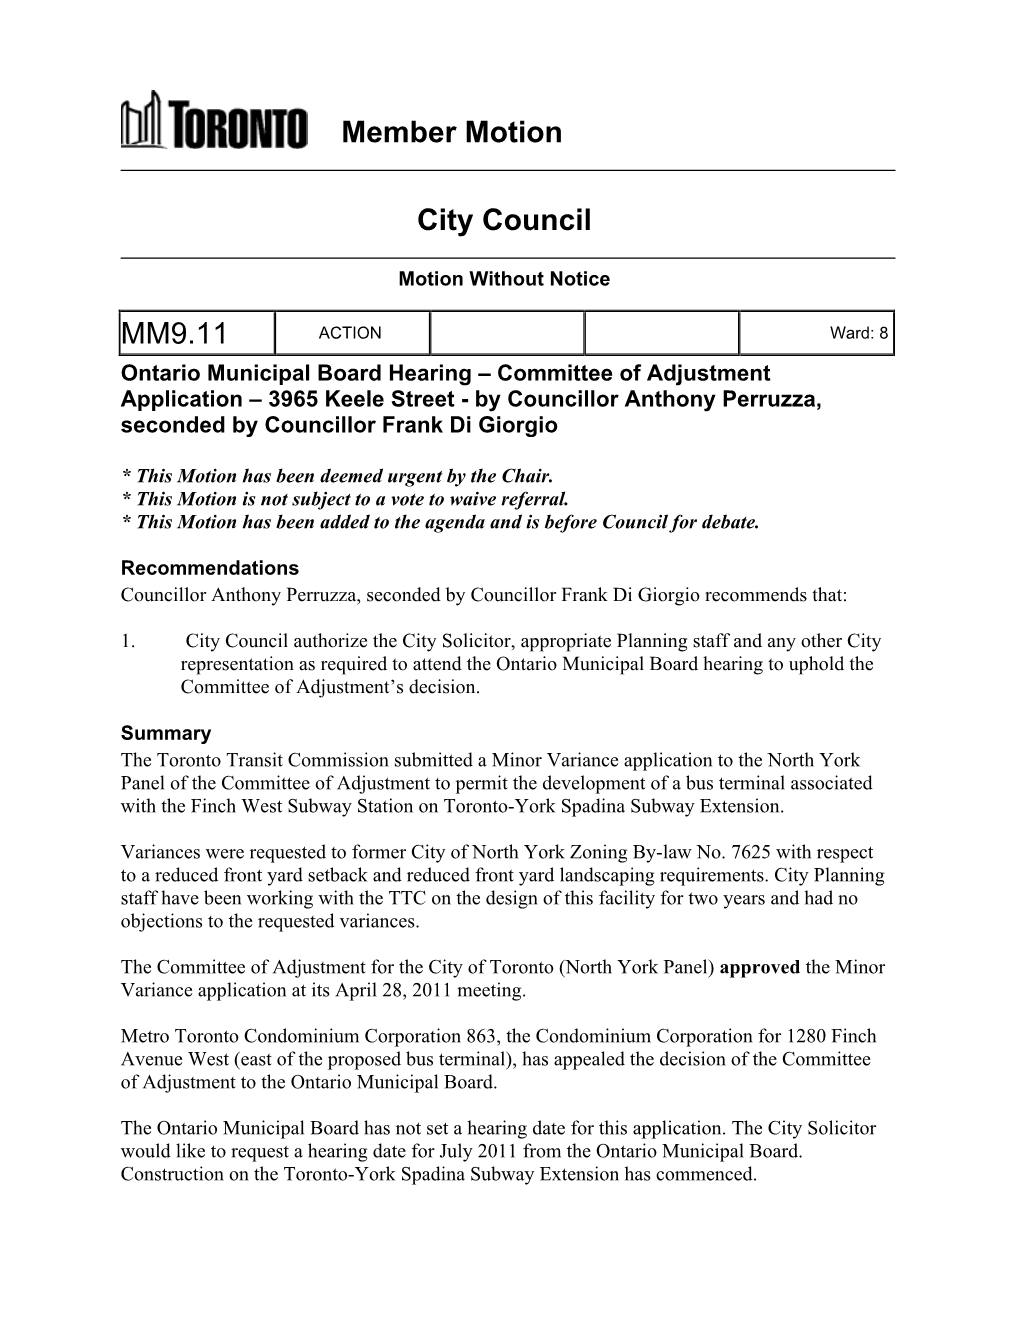 Member Motion City Council MM9.11